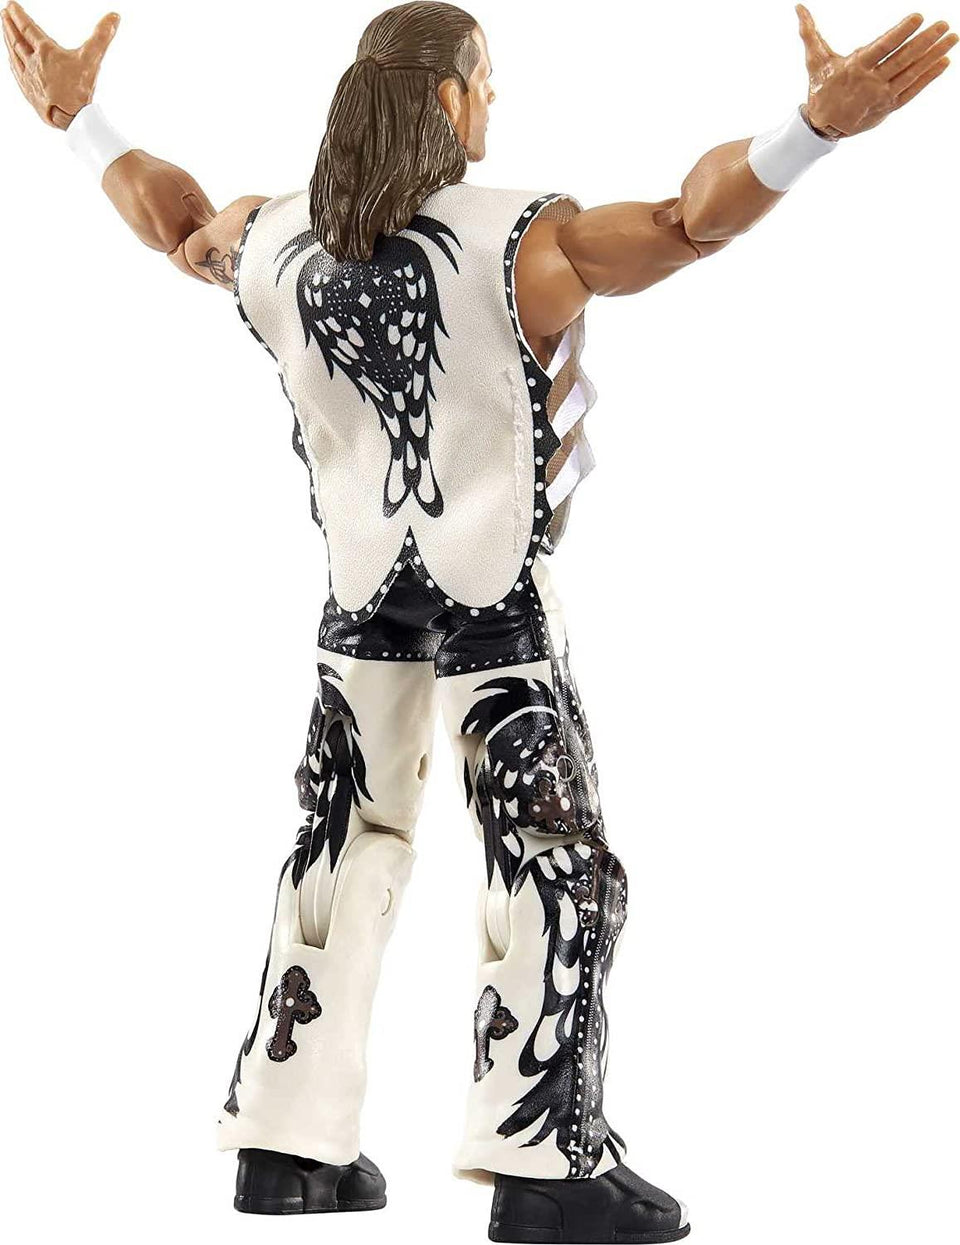 WWE Shawn Michaels Wrestlemania Elite Heartbreak Kid Superstar Wrestler Figure Mattel